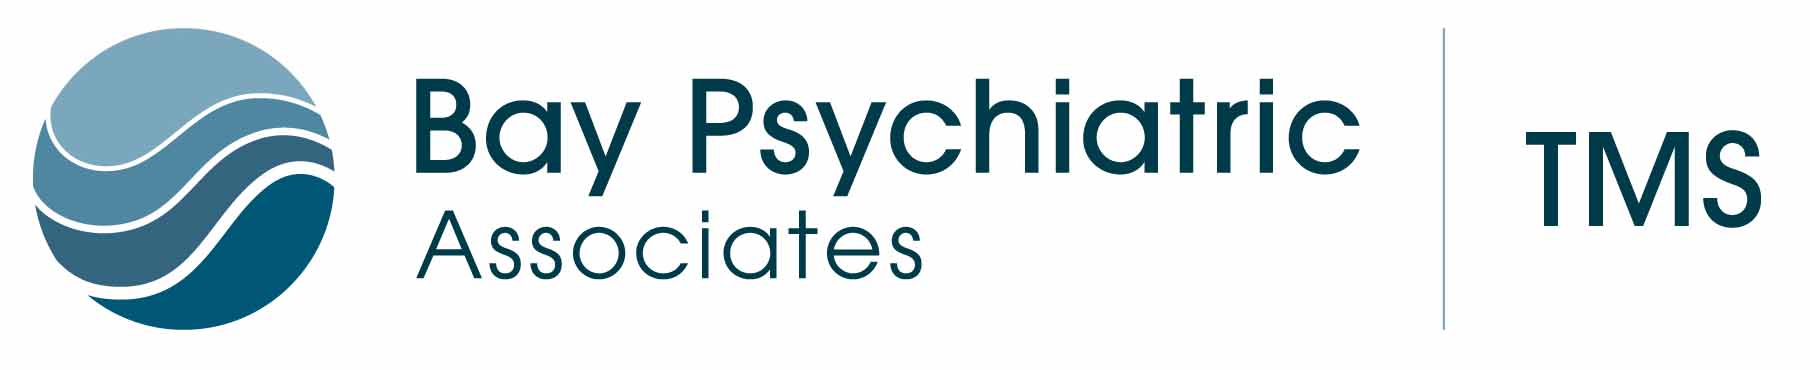 Bay Psychiatric Associates logo